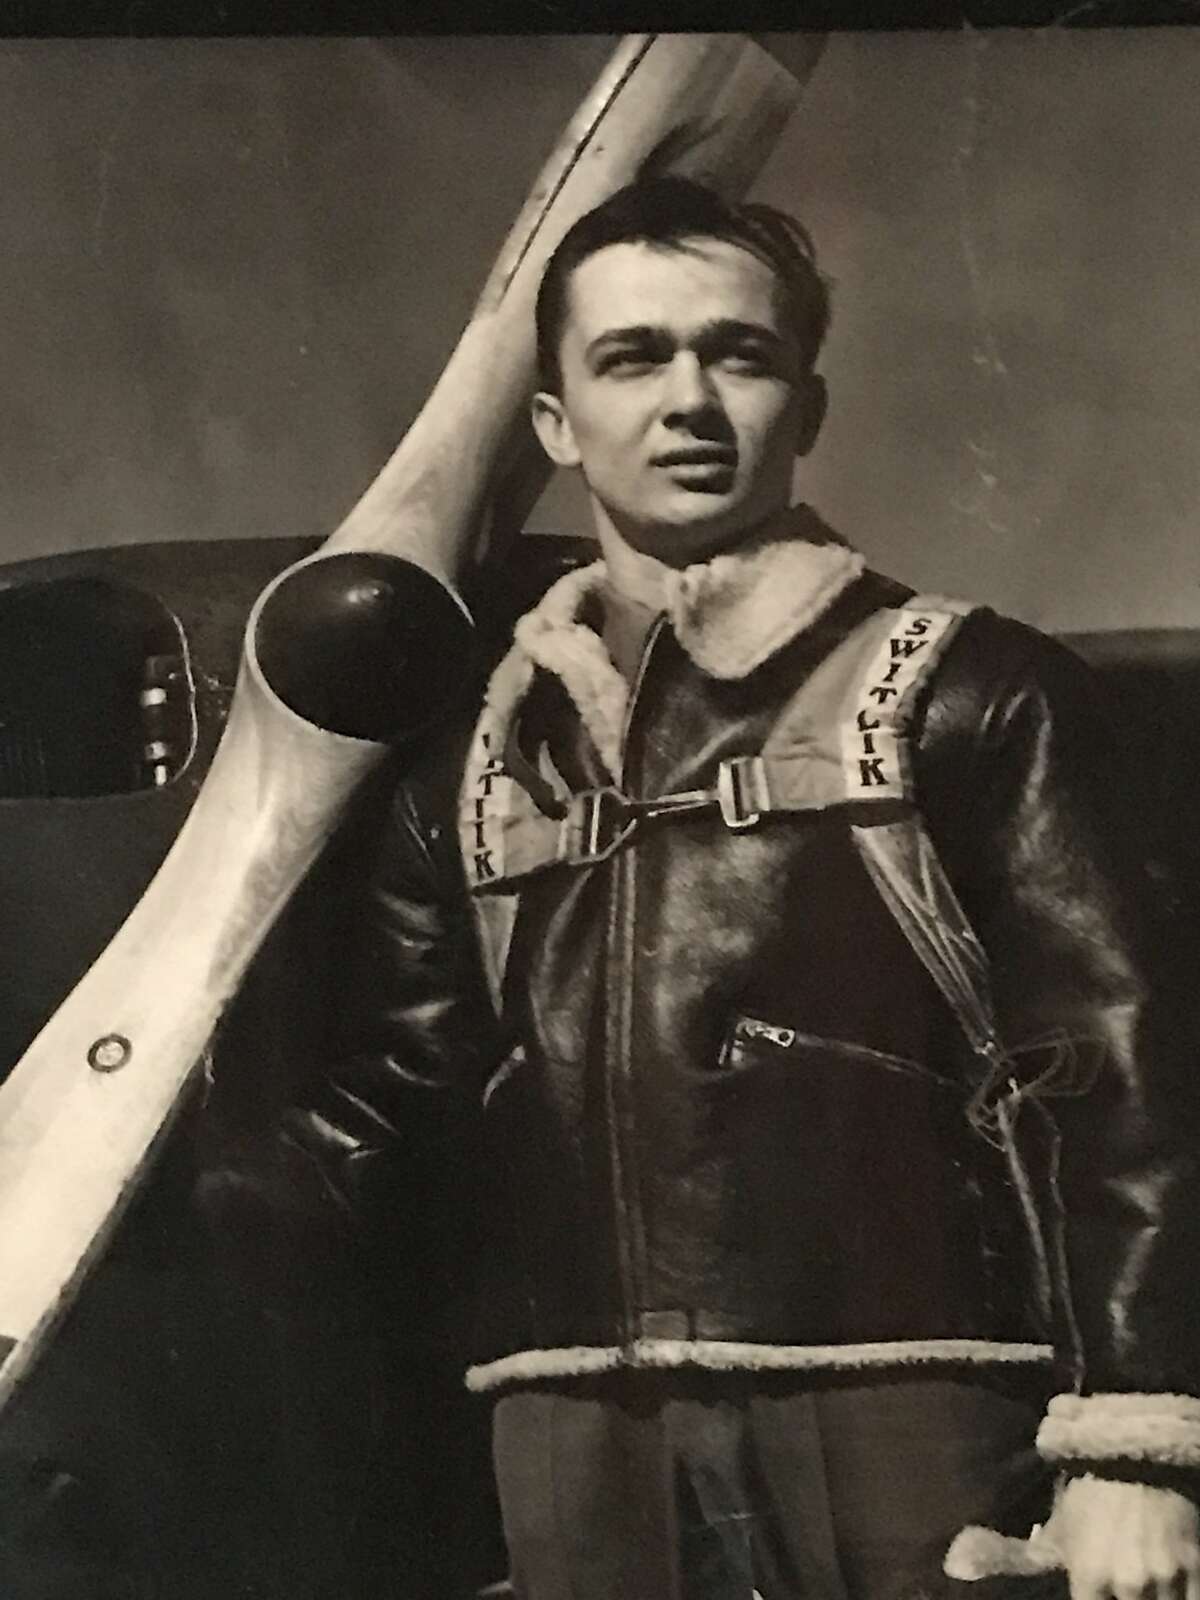 Paratrooper Glenn Atkinson with his plane during World War II.